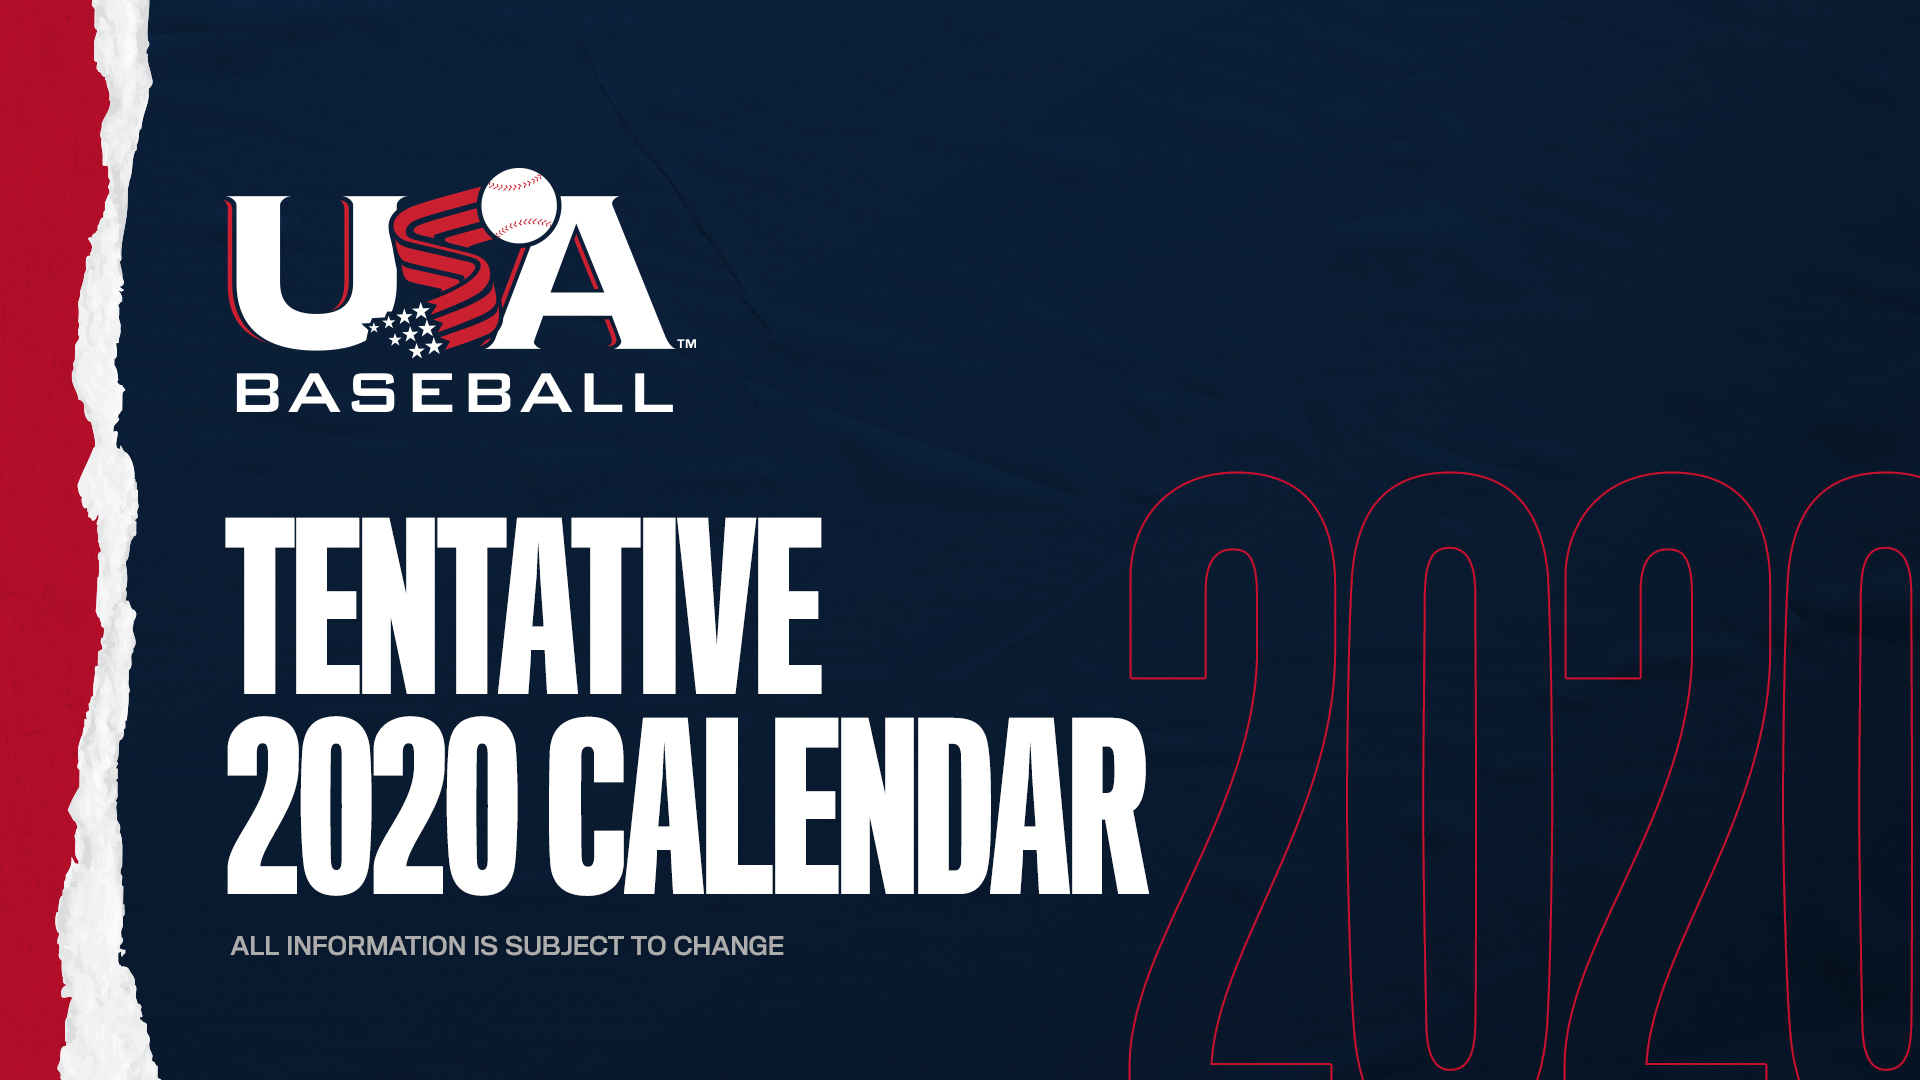 USA Baseball has released a revised calendar ©USA Baseball